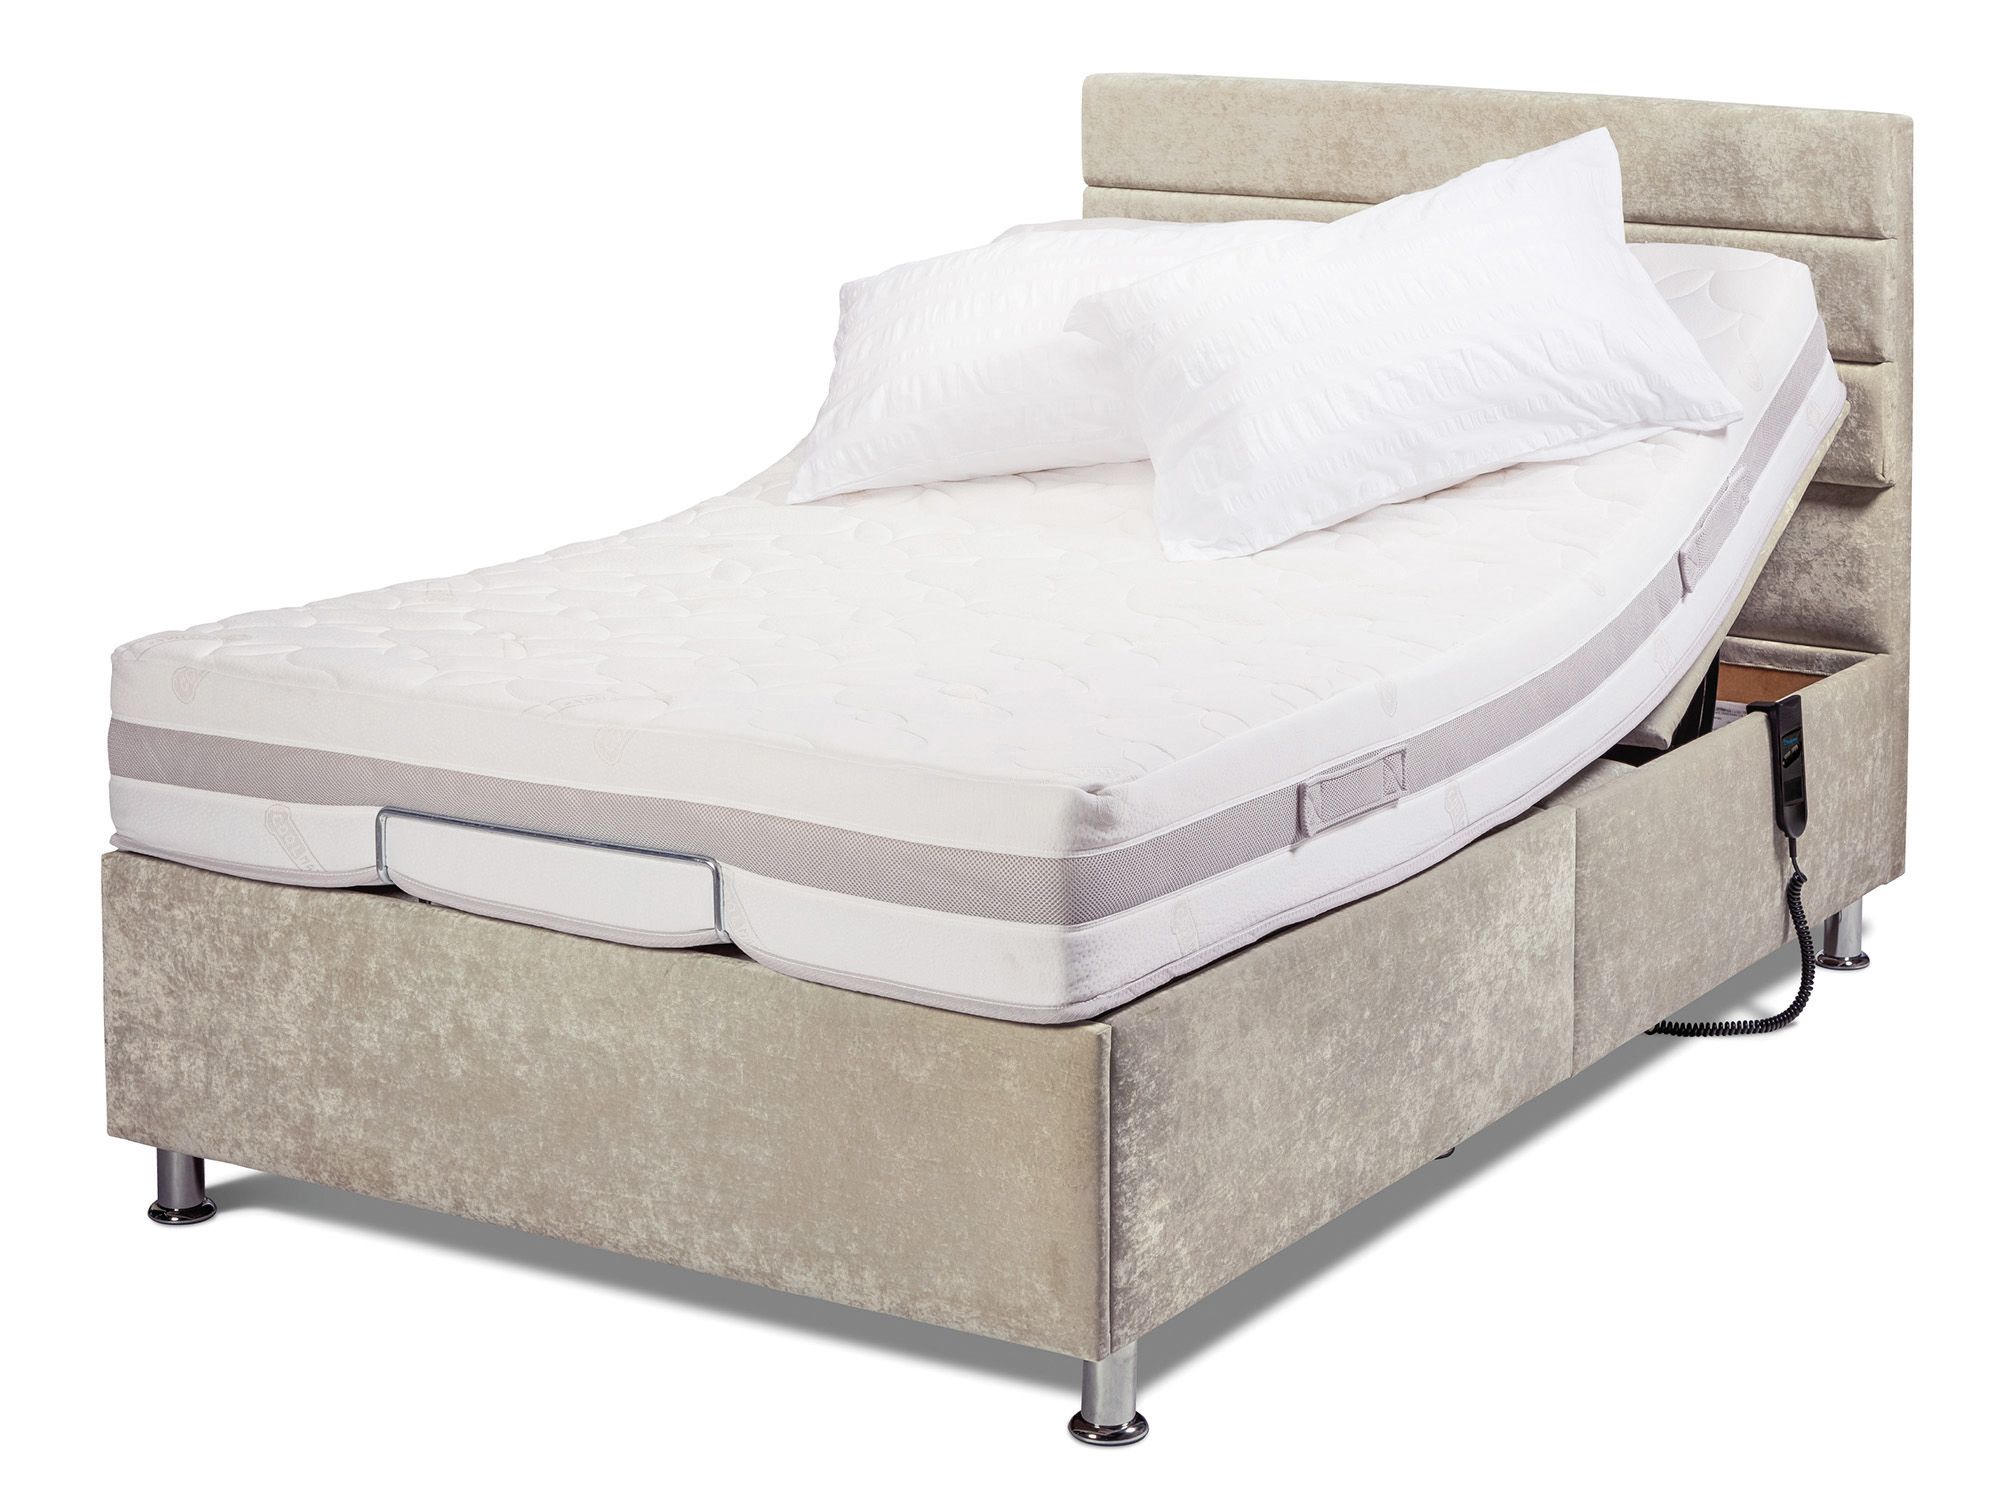 double bed mattress hobart